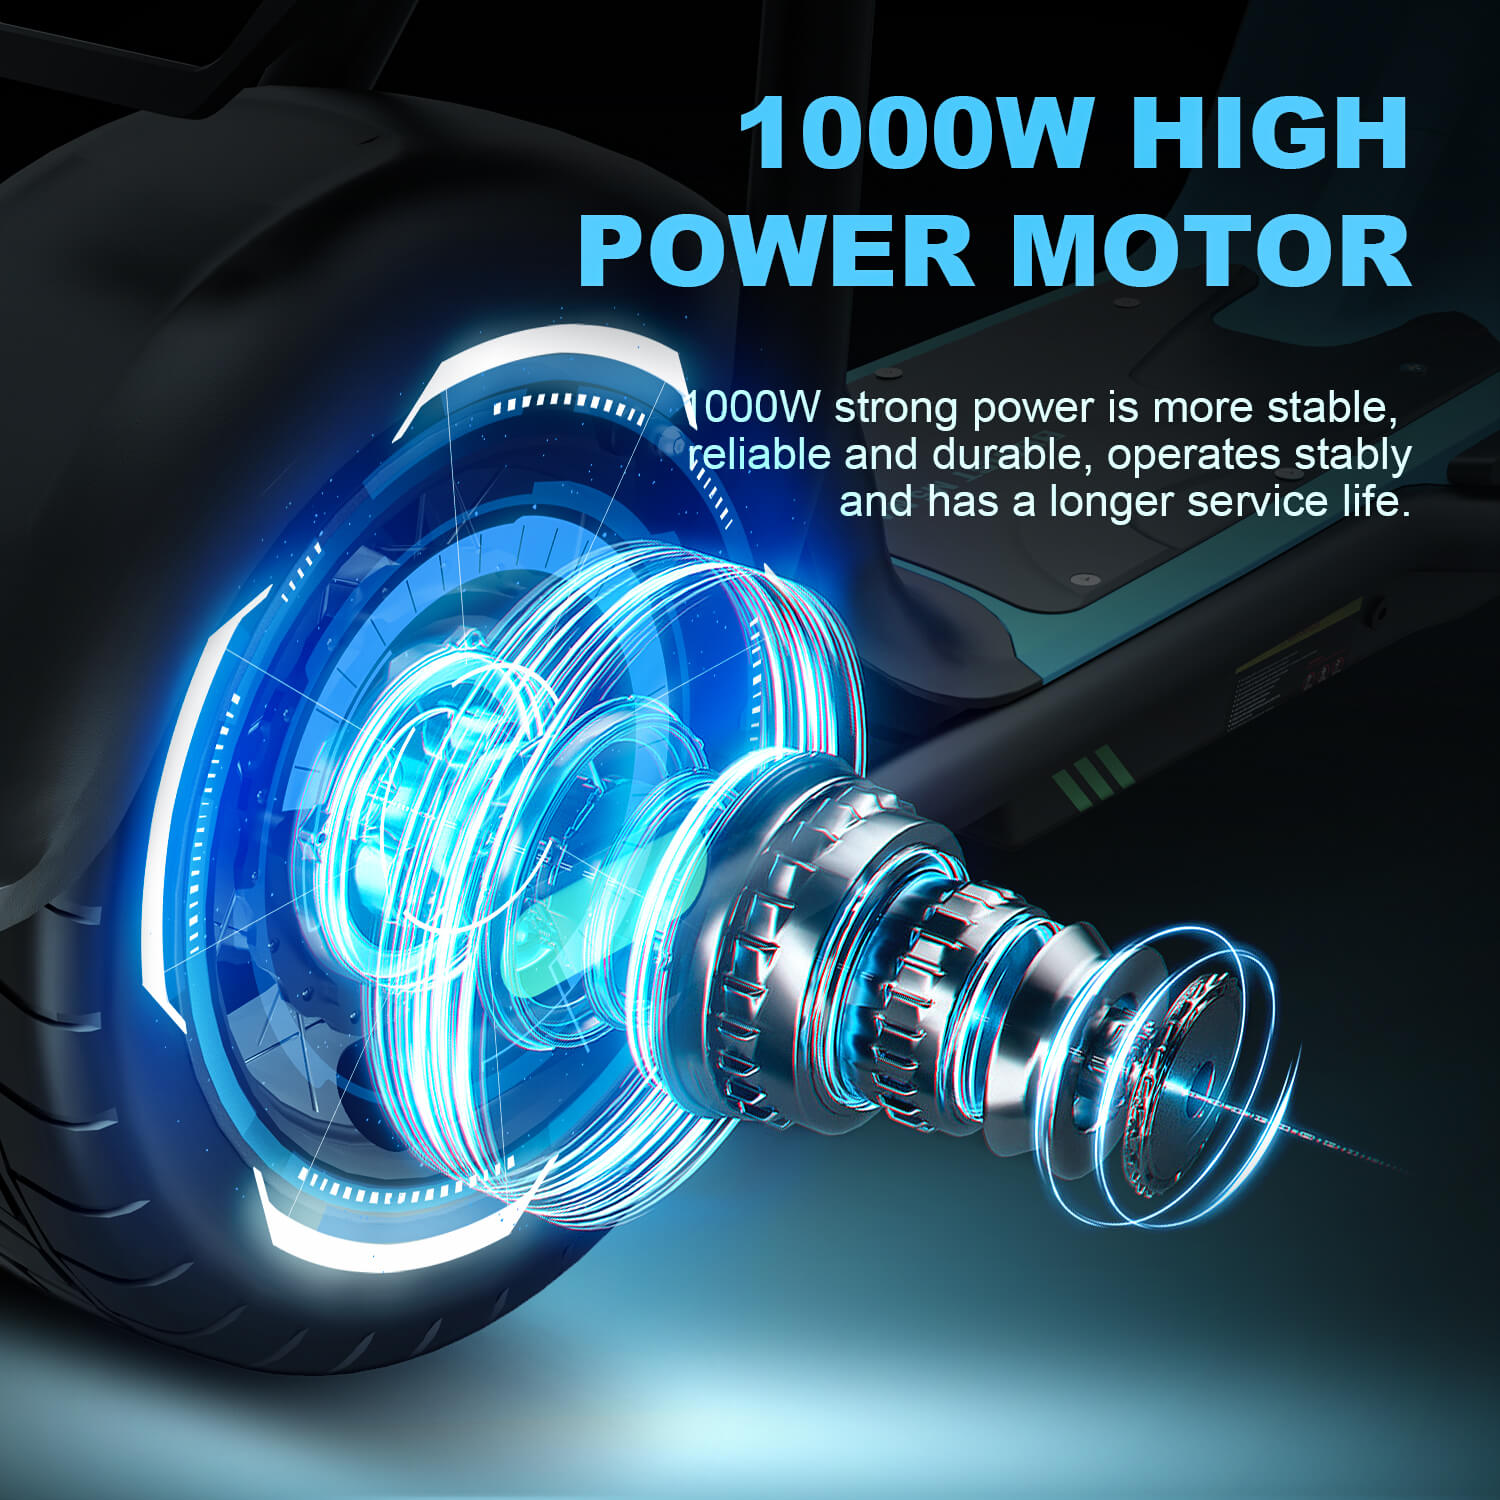 1000w High Power Motor